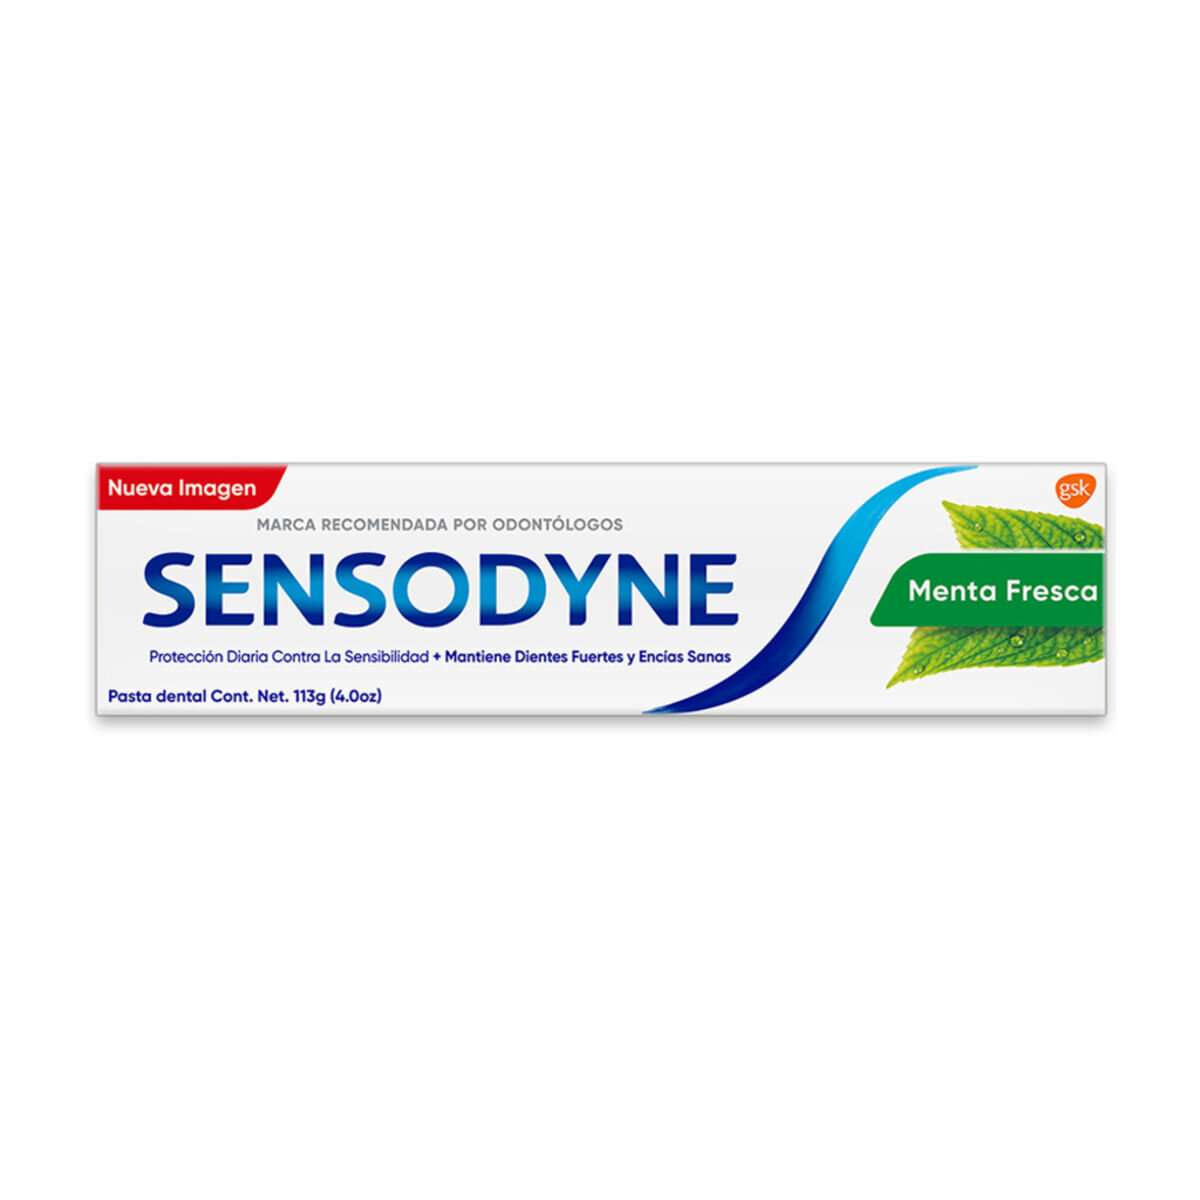 Sensodyne 24/7 Sensitivity Protection Toothpaste - Fresh Mint 4oz